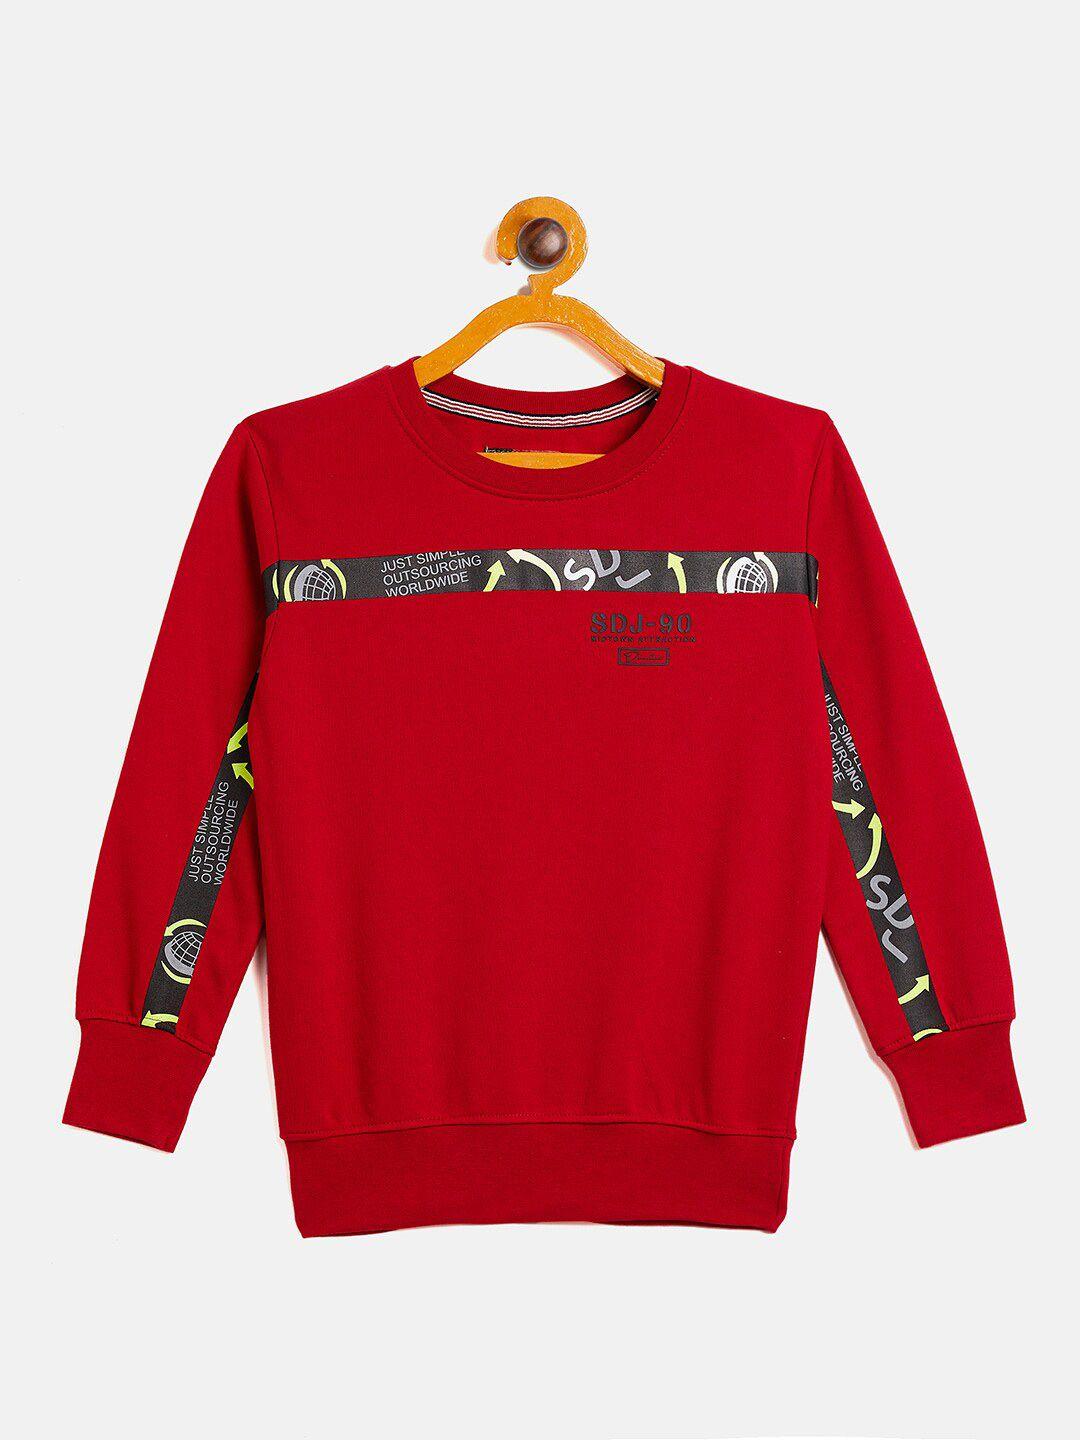 duke-boys-red-printed-sweatshirt